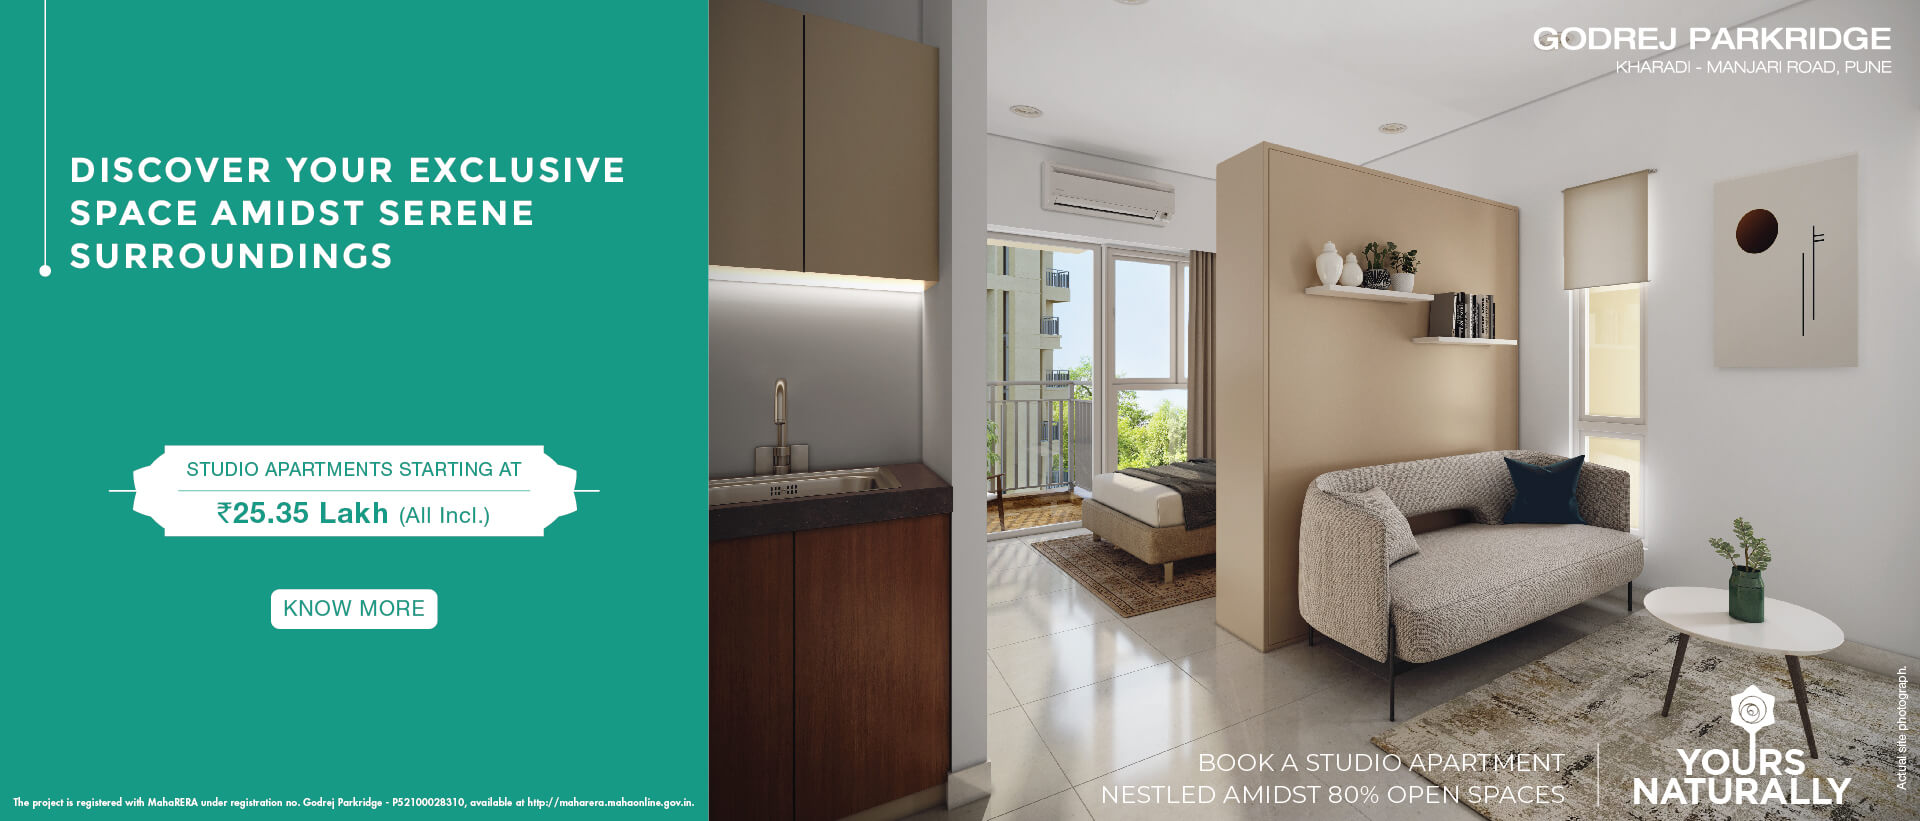 Studio apartments starting Rs 25.35 Lac (all incl.) at Godrej Parkridge, Pune Update